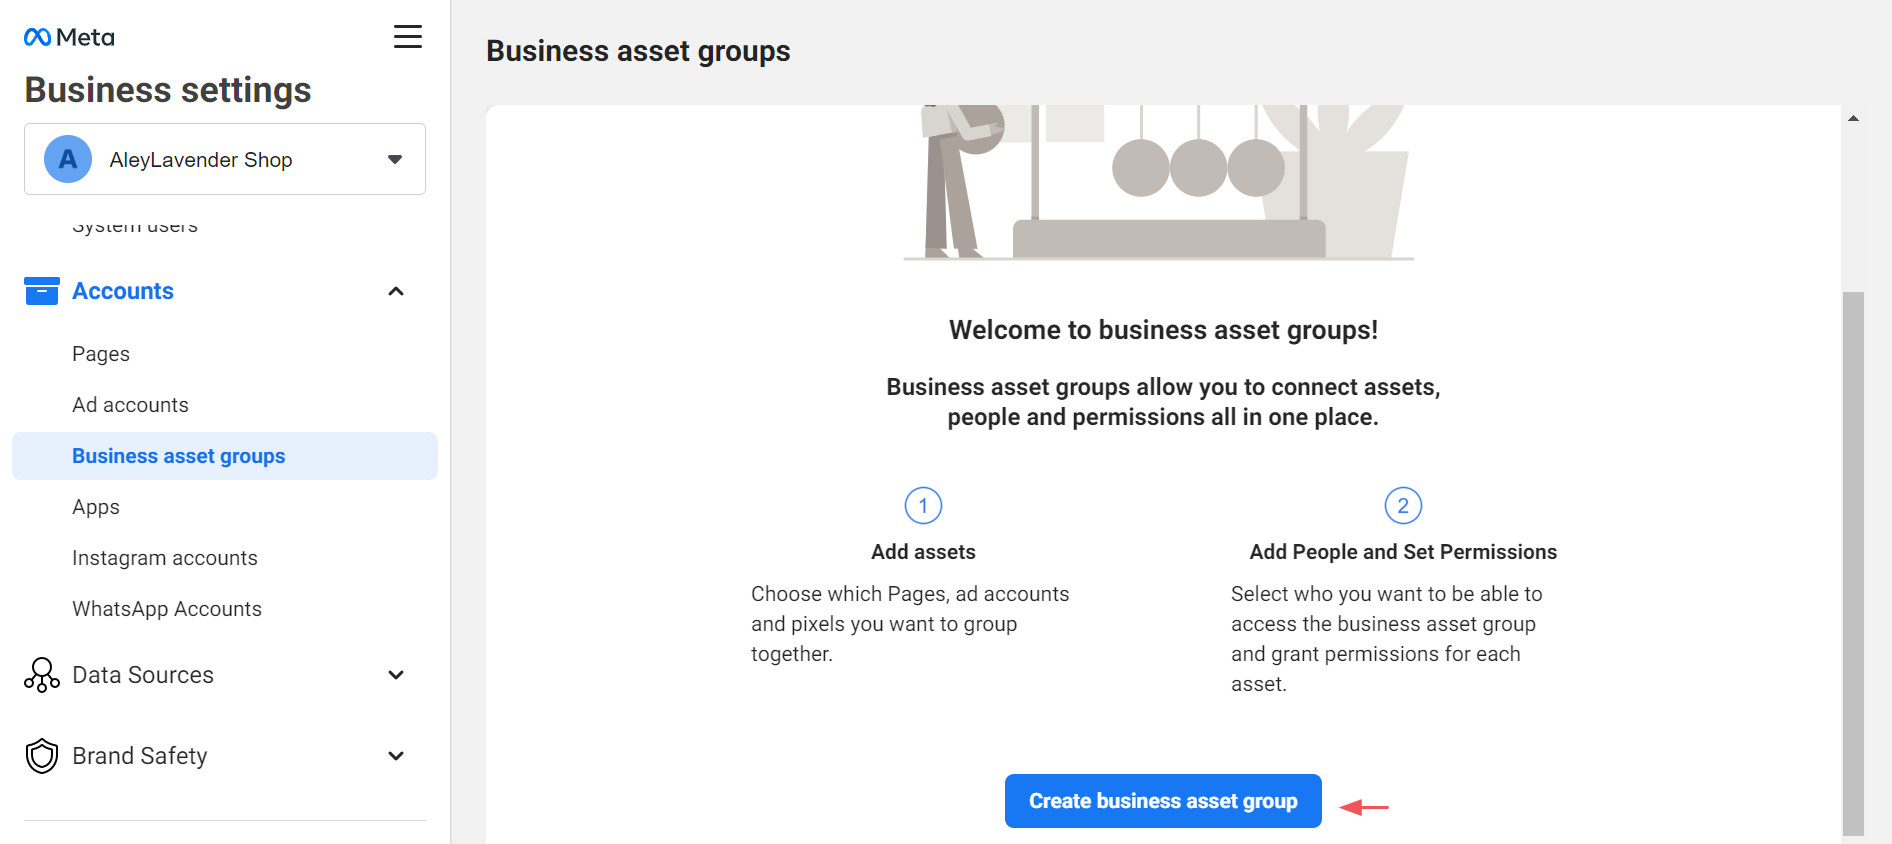 Click “Create business asset group”